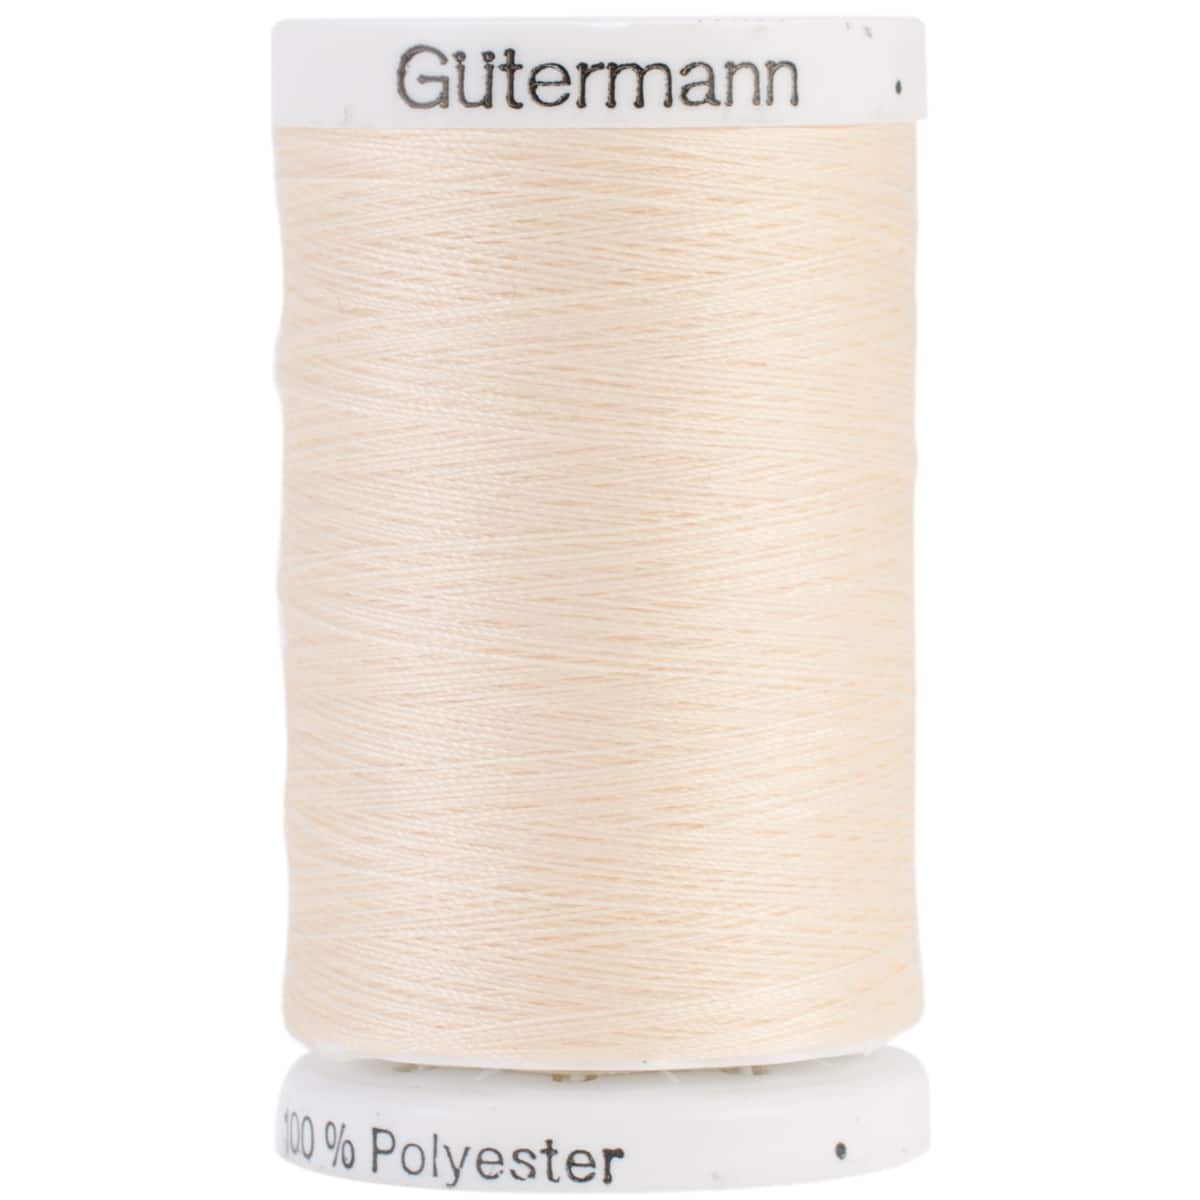 Gutermann Natural Cotton Thread 273yd-Jay Blue, 1 count - Kroger